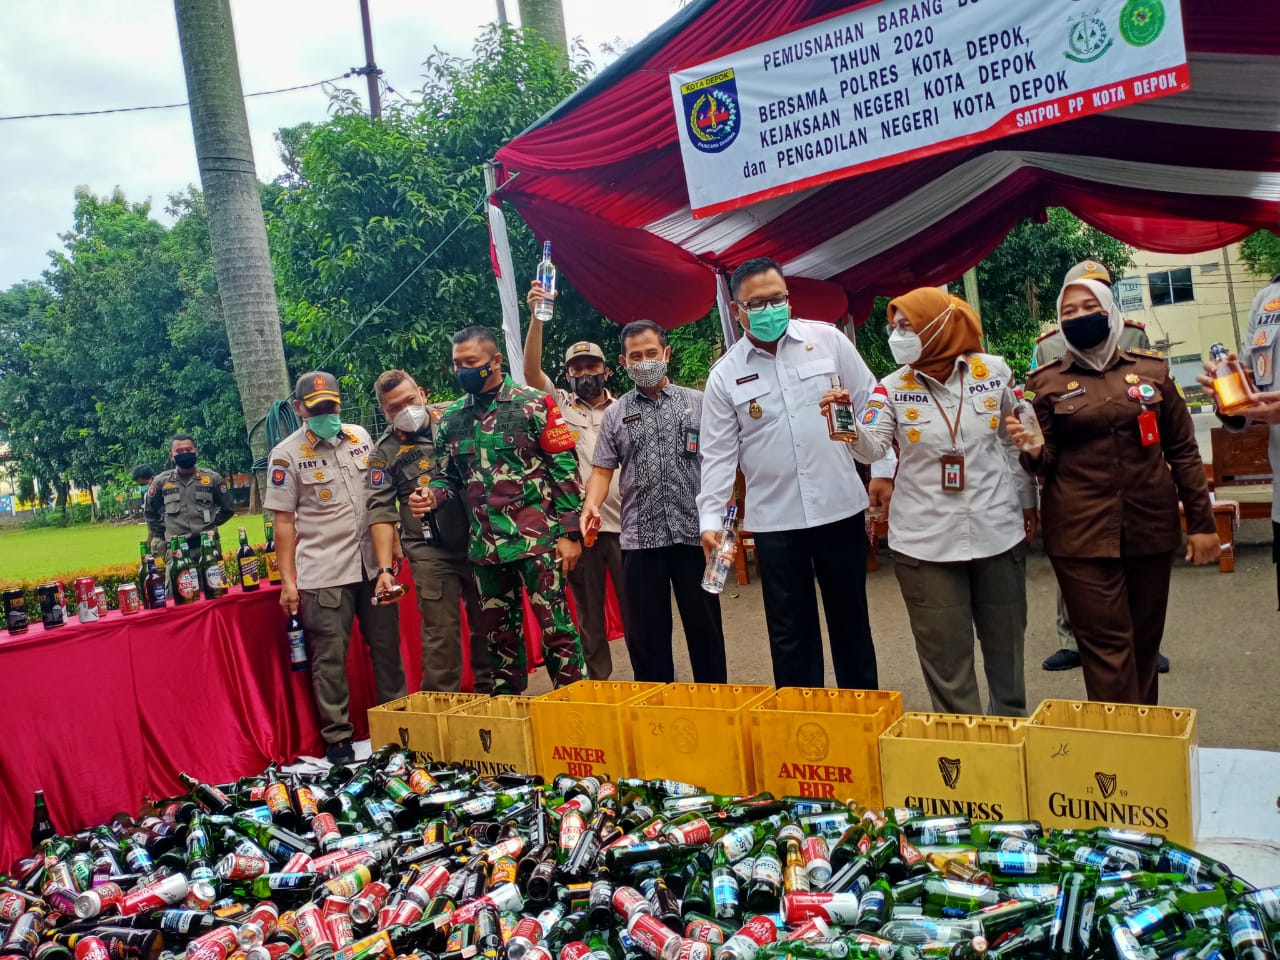 3.155 Botol Miras dimusnahkan Pemkot Depok